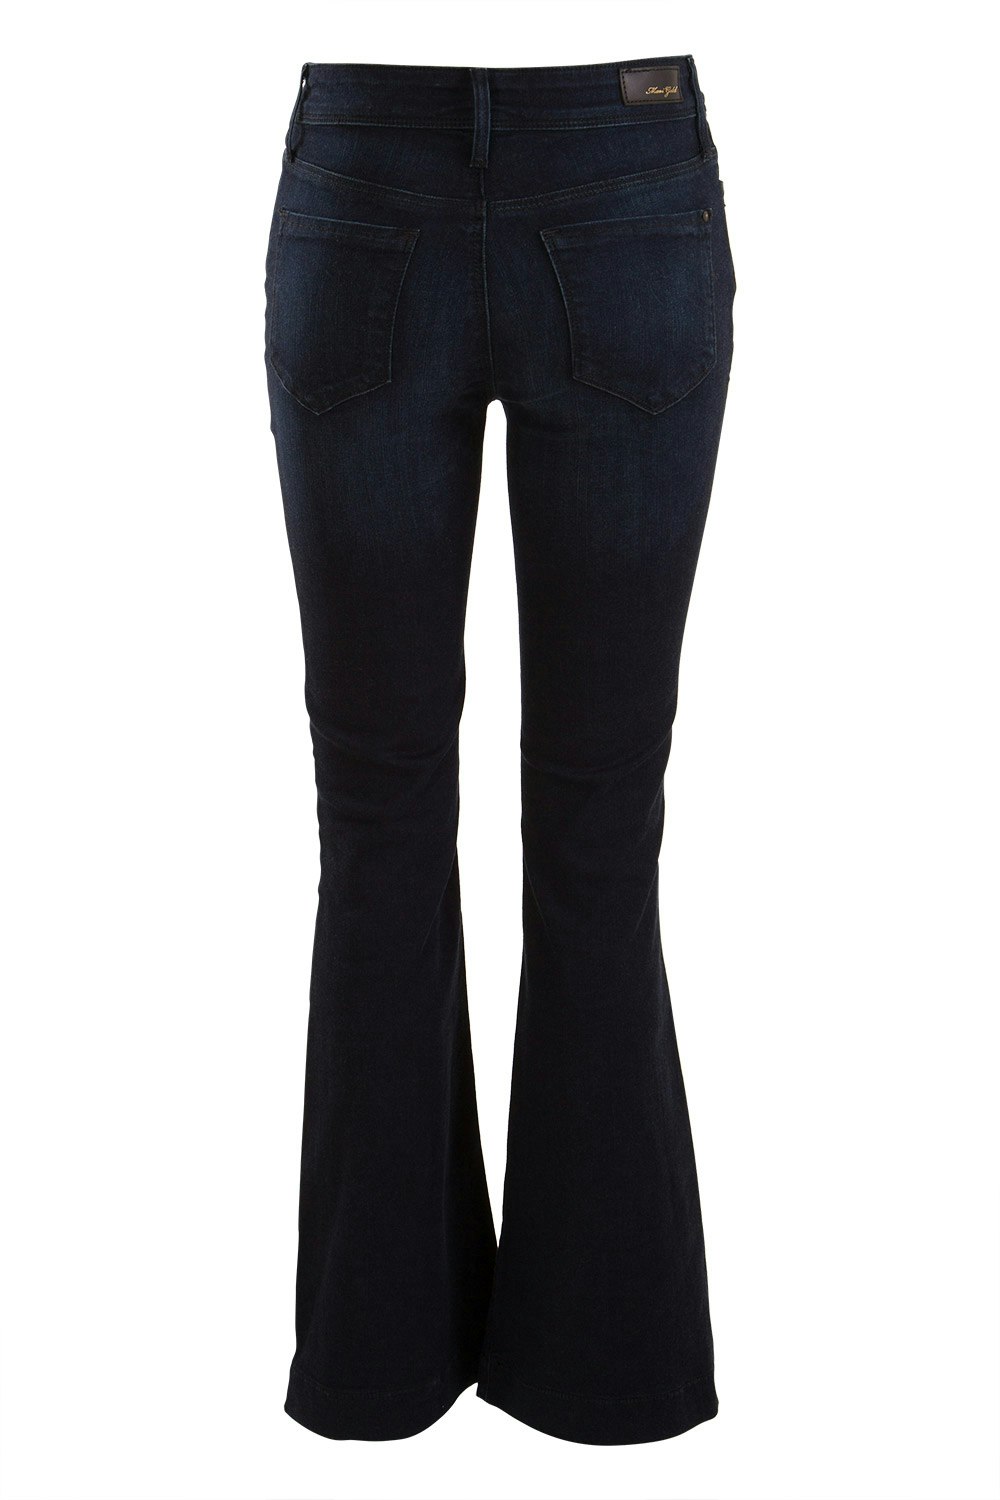 Mavi jeans Sheena High Rise Flare - Womens Flared Jeans - Birdsnest ...